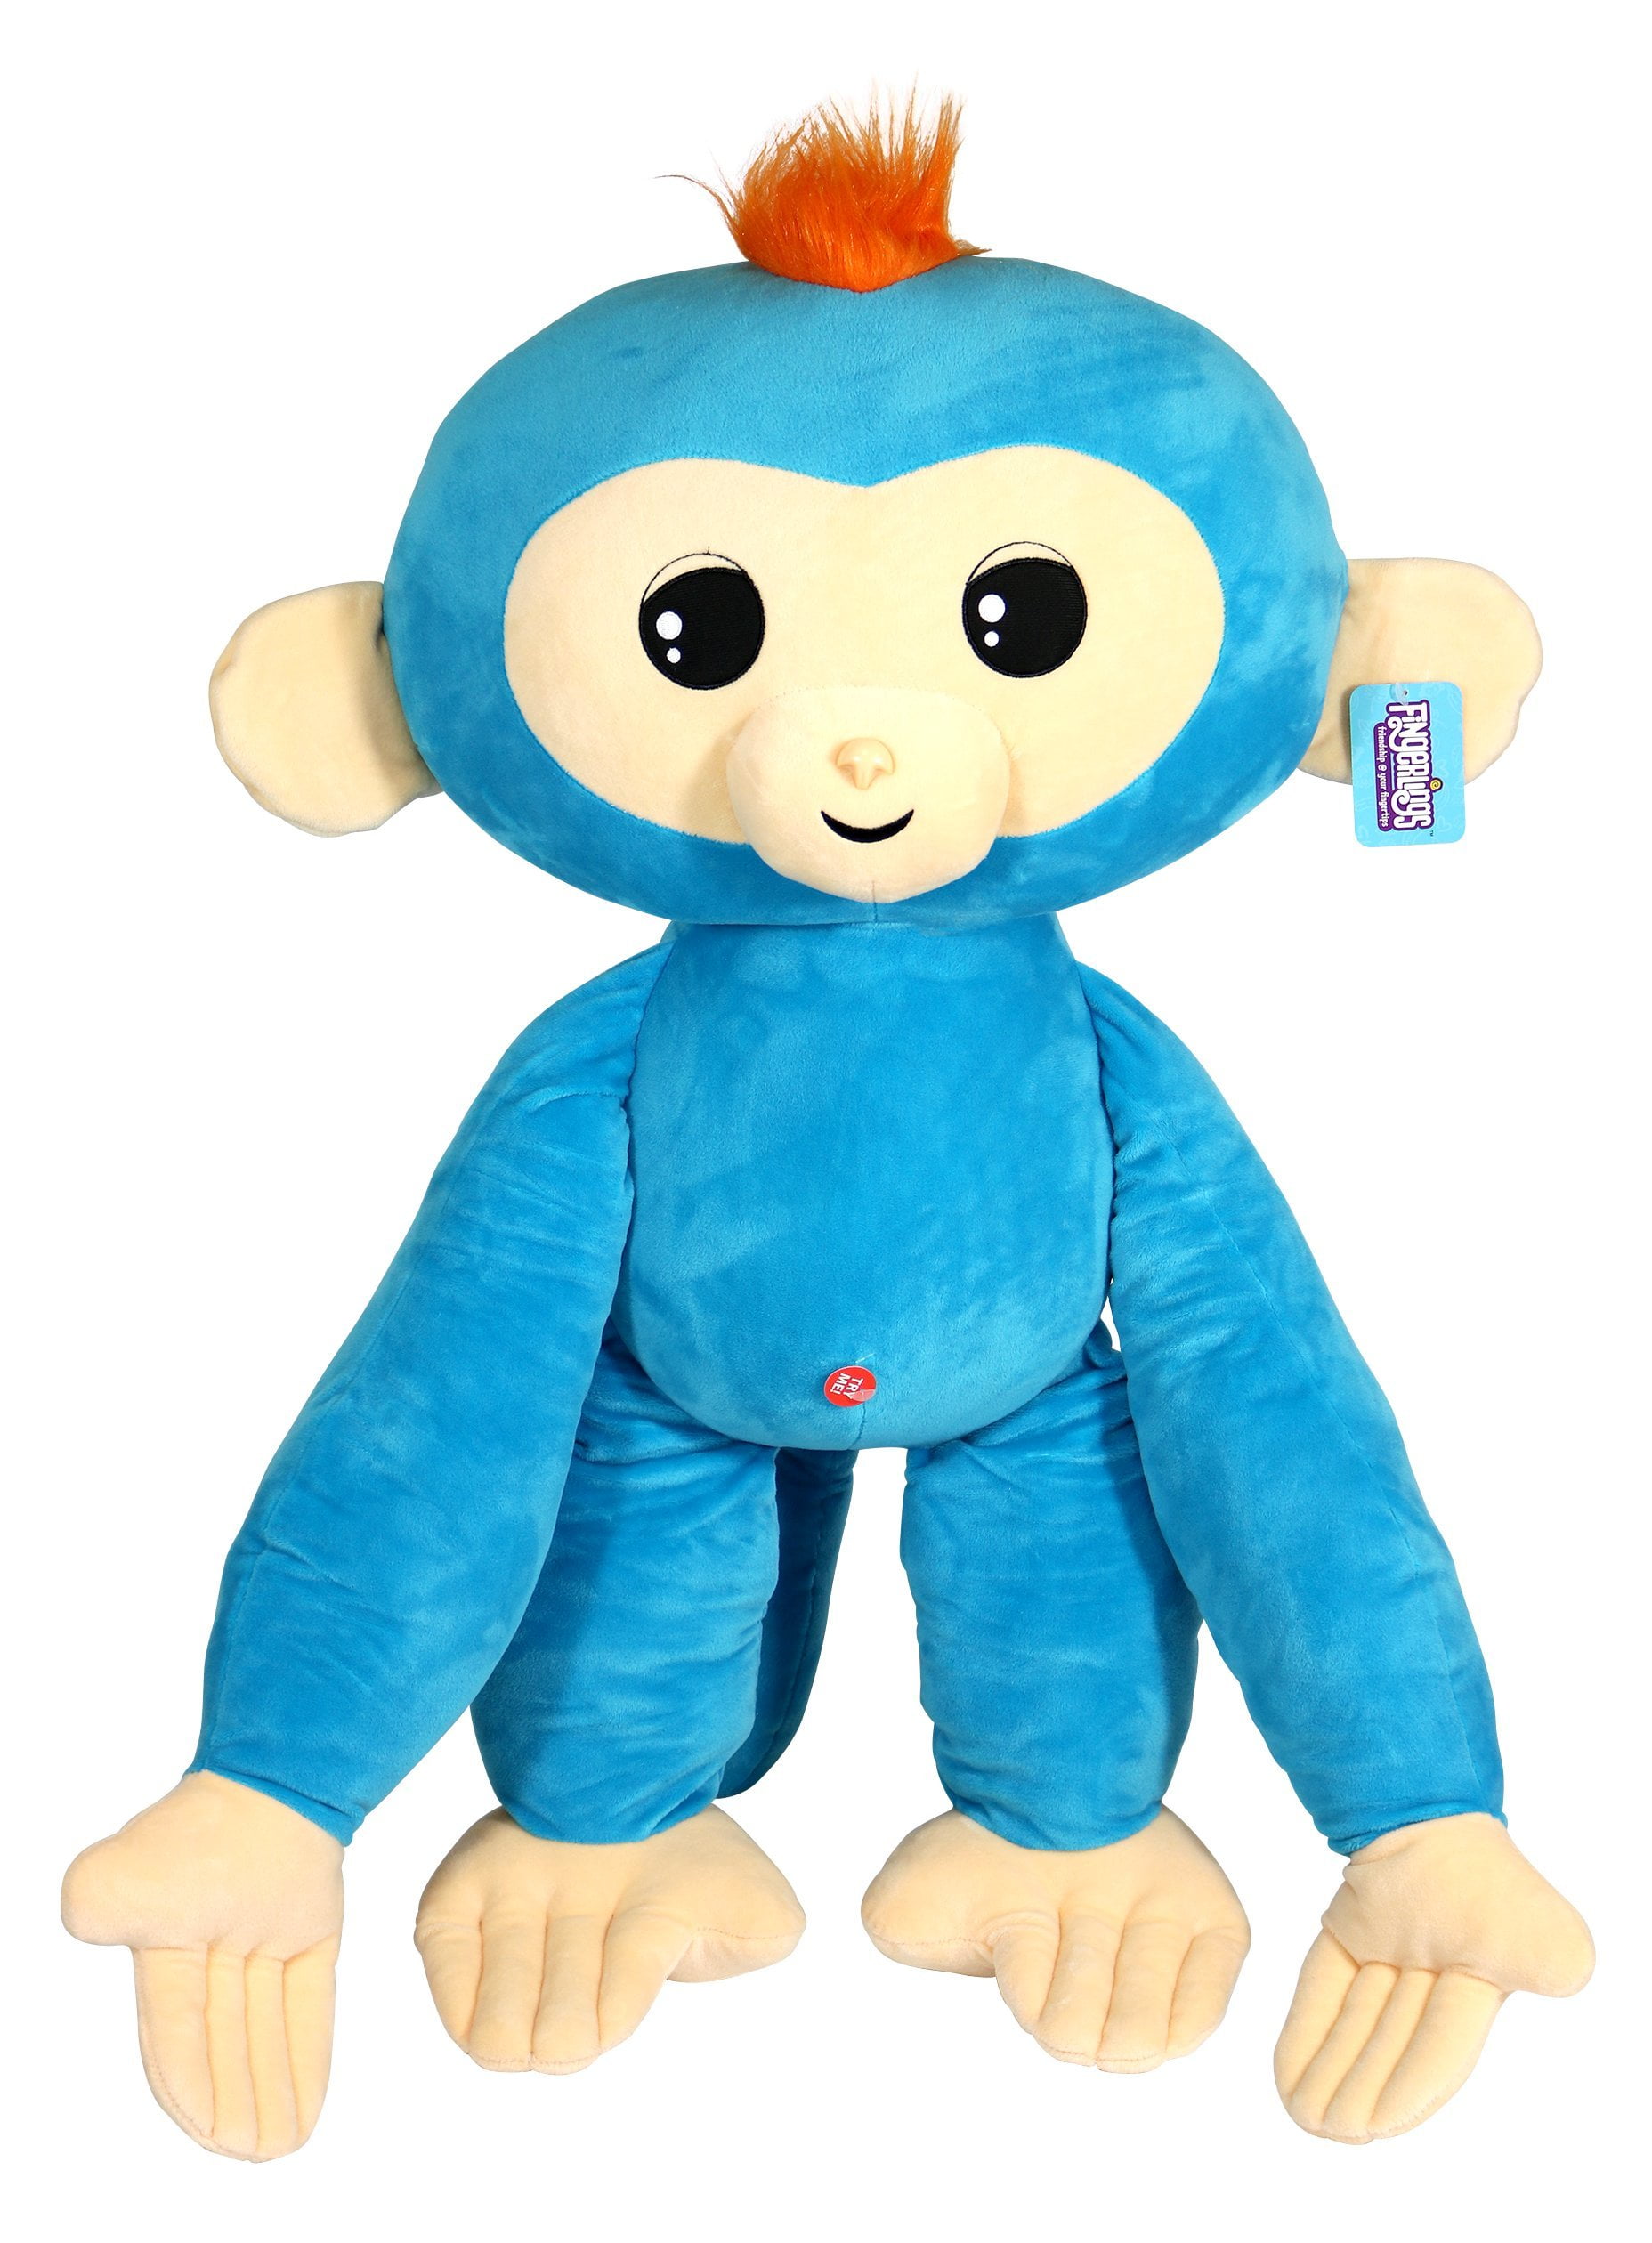 Fingerlings HUGS BORIS Blue Advanced Interactive Plush Baby Monkey Pet WowWee 771171135319 